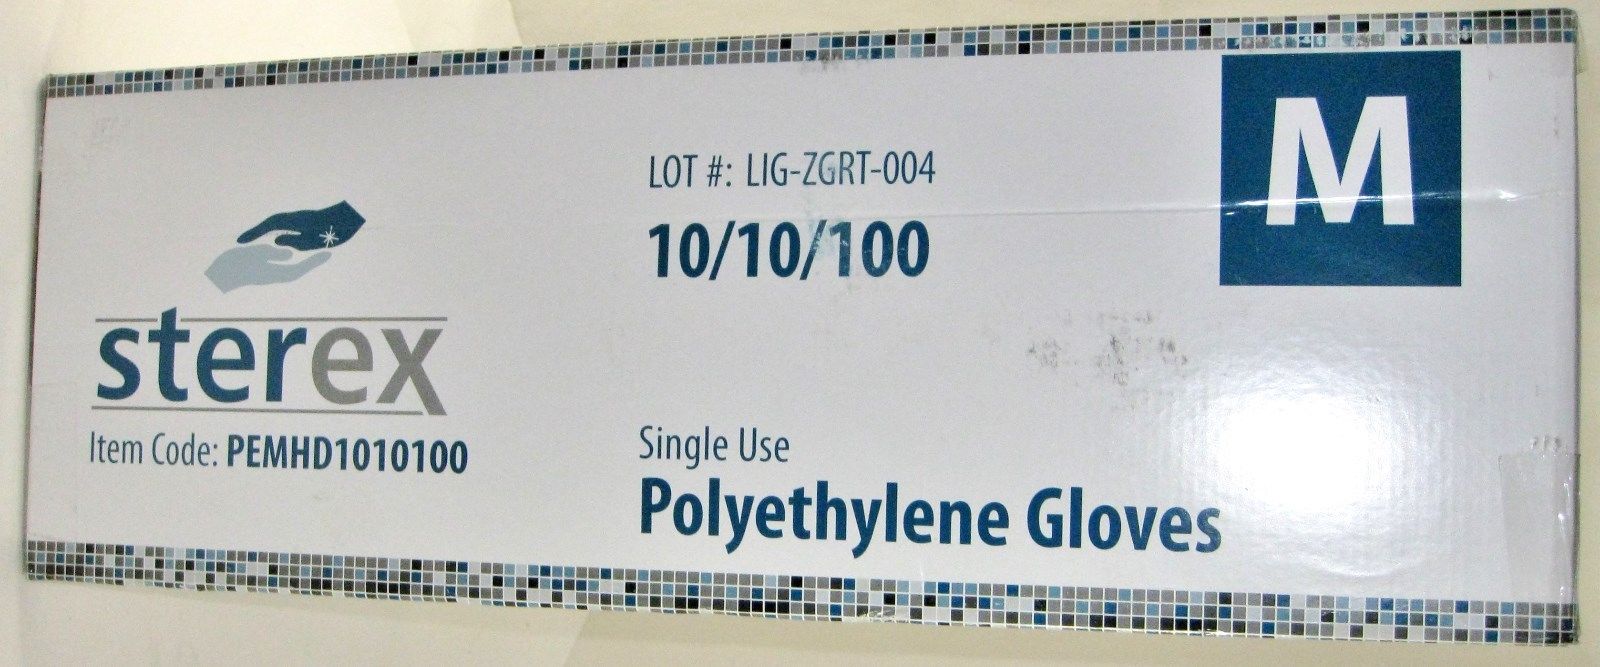 10,000 Disposable Gloves Polyethylene Food Handling Service Sterex  Case